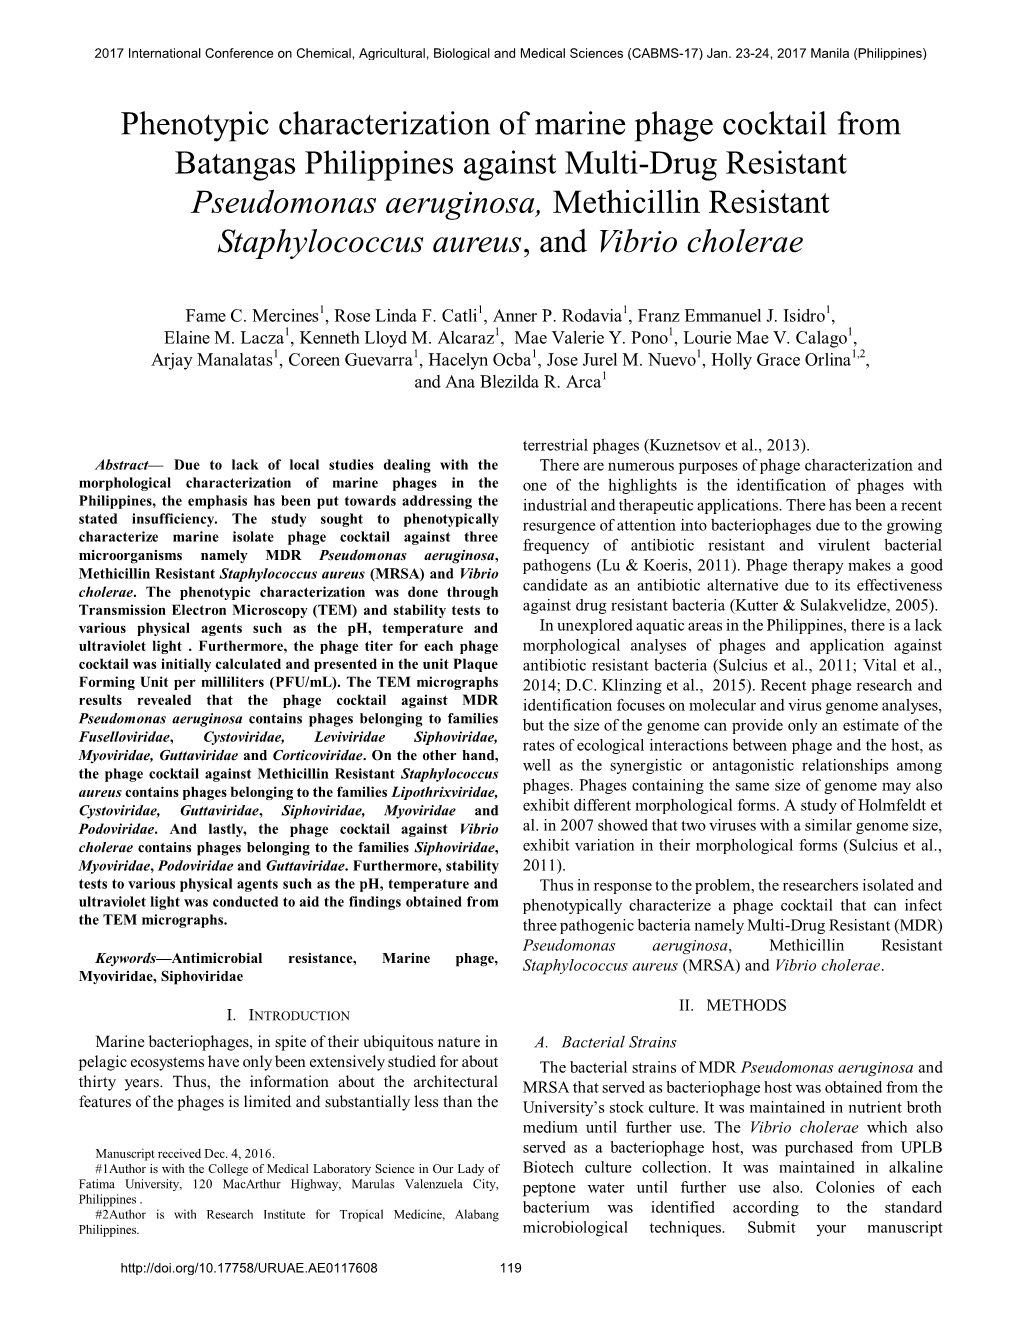 Phenotypic Characterization of Marine Phage Cocktail from Batangas